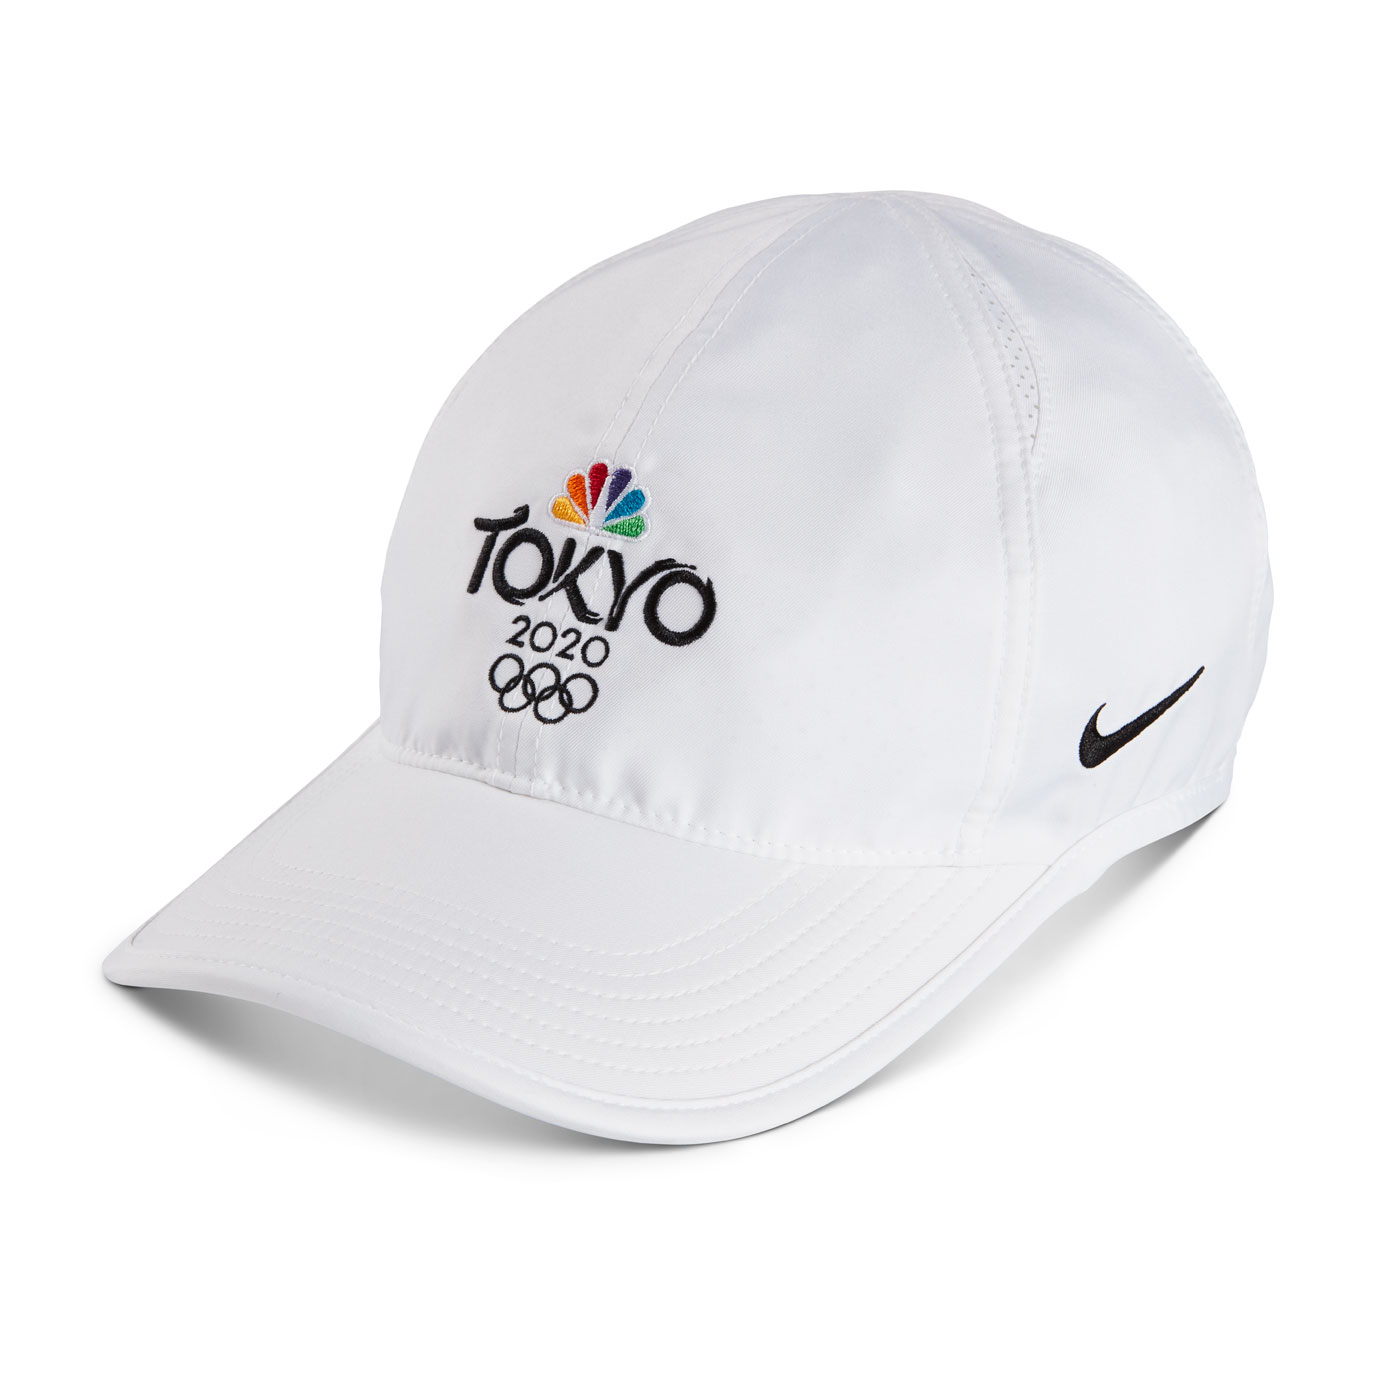 Tokyo 2020 Nike Performance Cap | NBC 